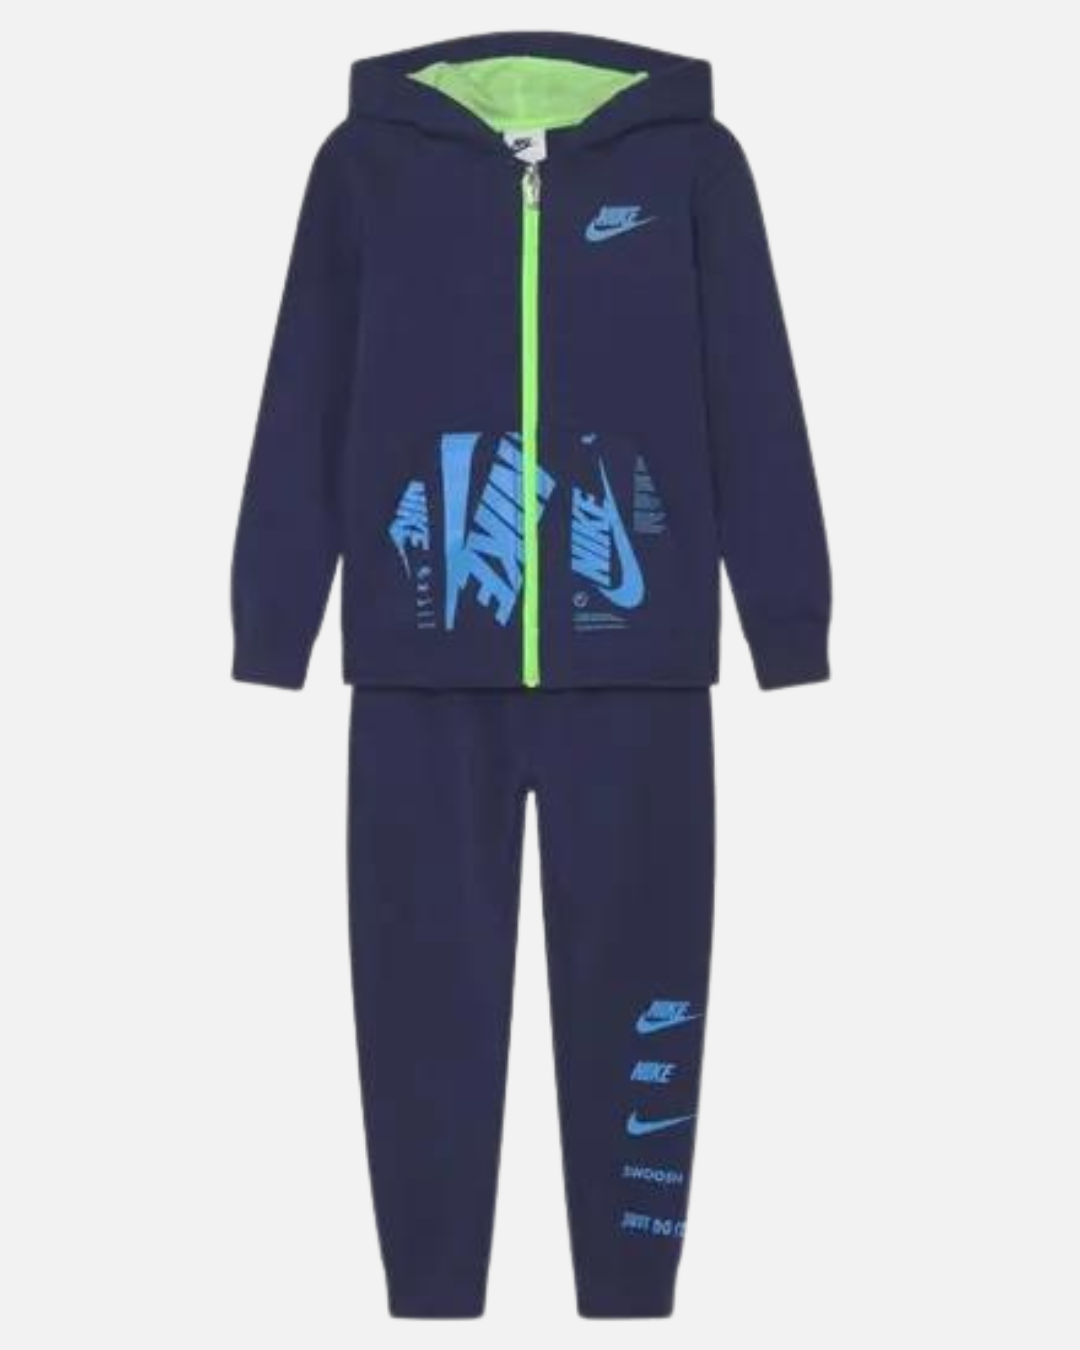 Nike Fleece Po and Jogger Set for Kids - Blue